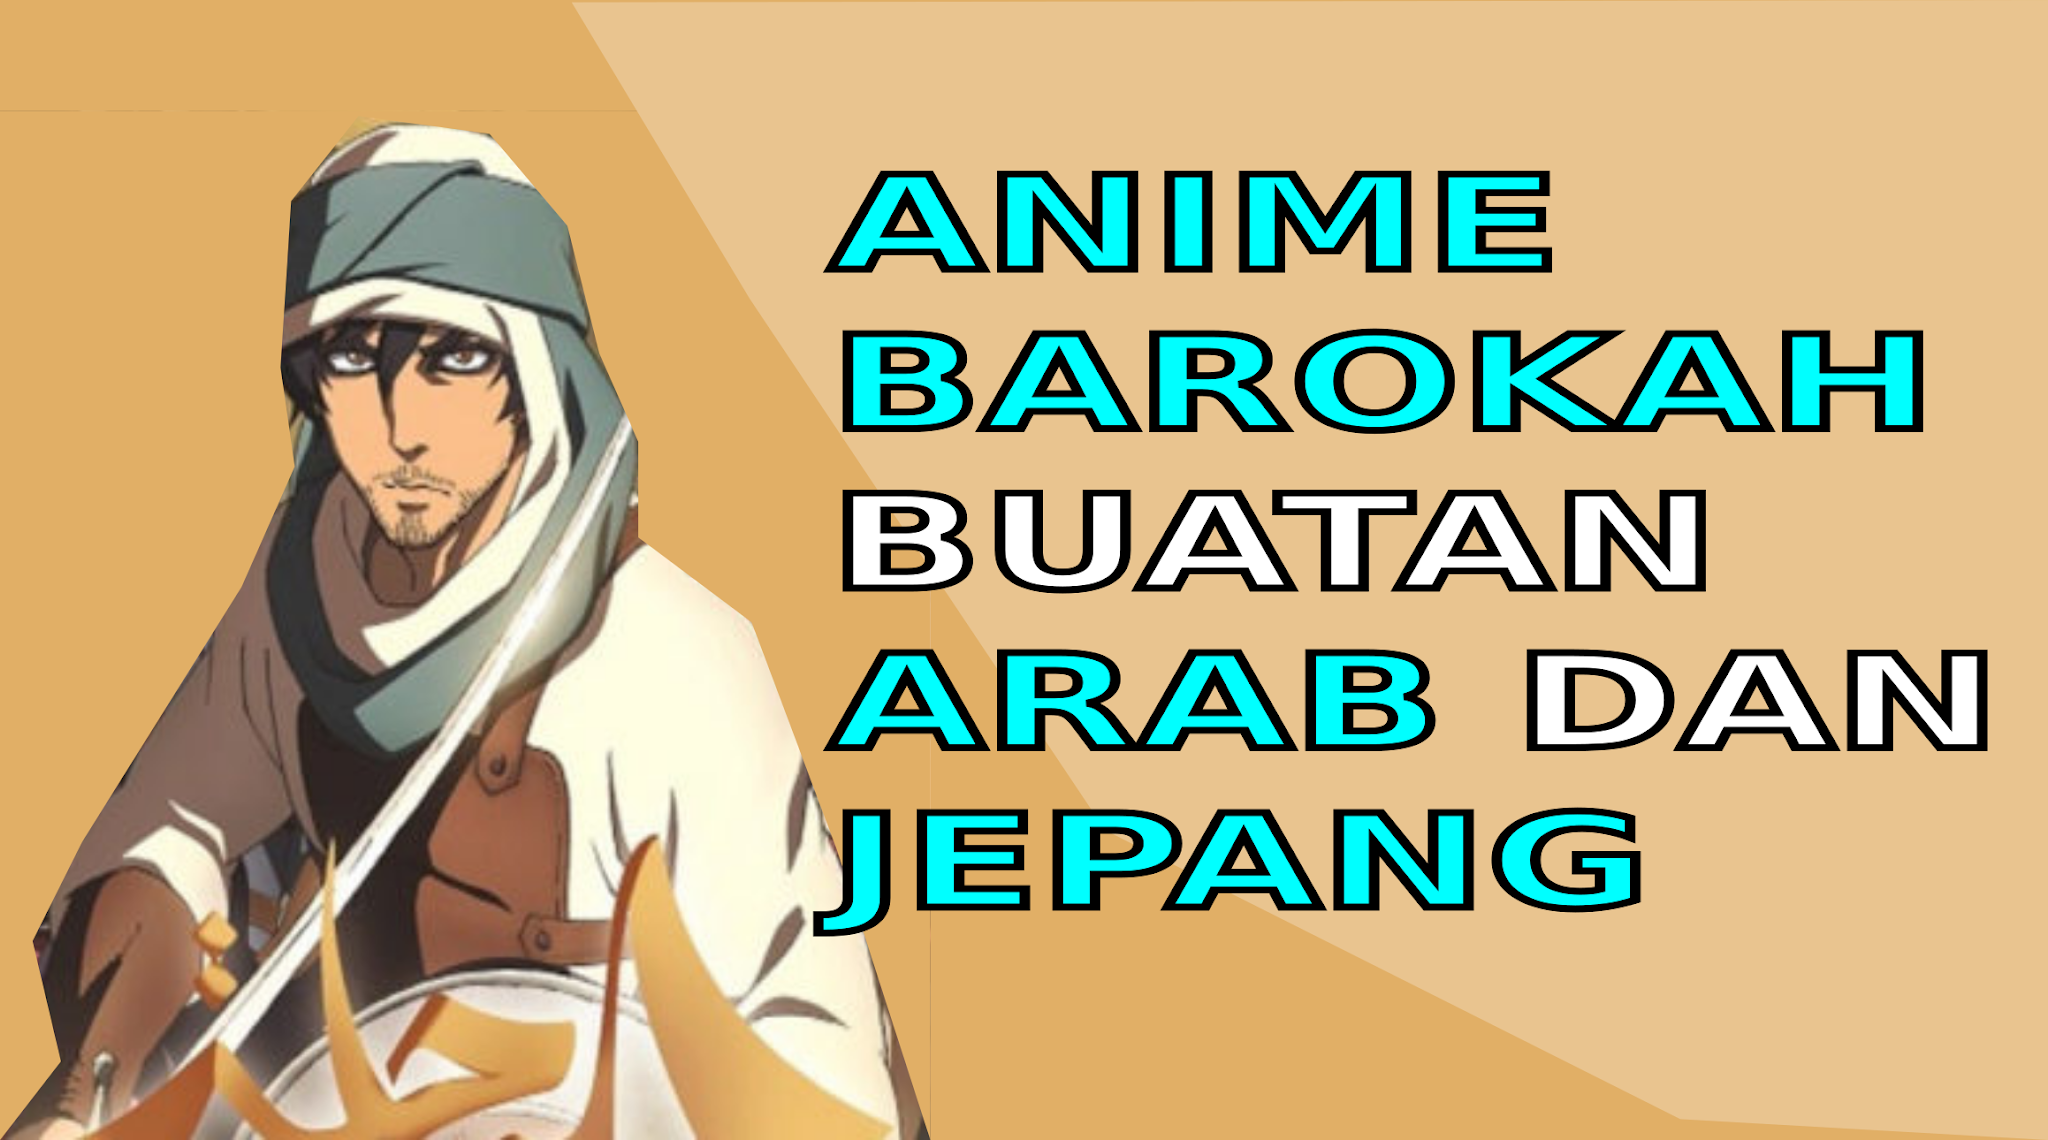 Anime The Journey,Anime Barokah buatan Arab Saudi dan Jepang